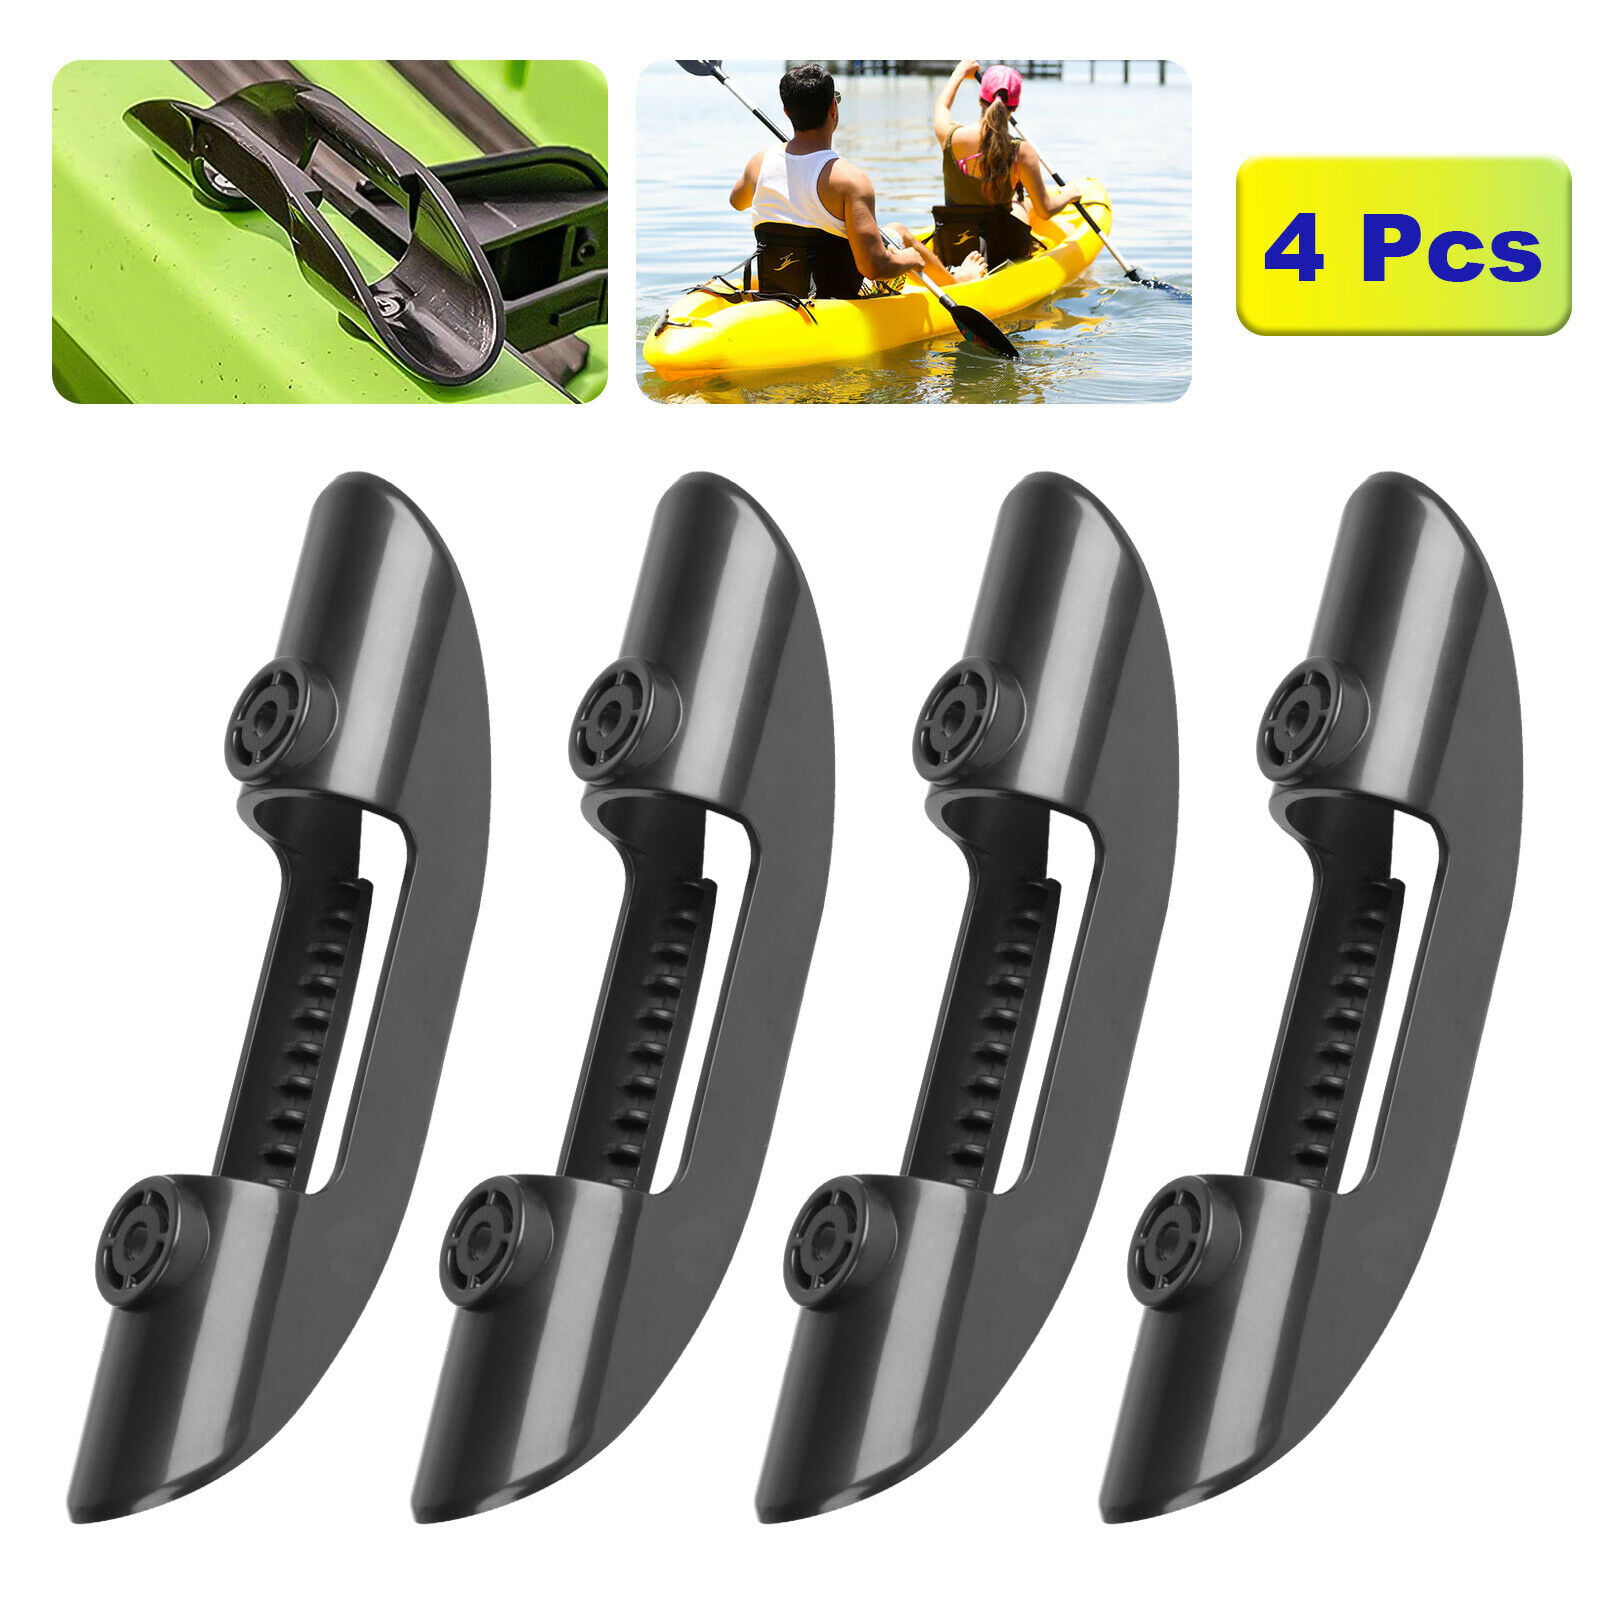 2/4PCS Kayak Marine Boat Paddle Clip Holder Watercraft Black Plastic Accessories 